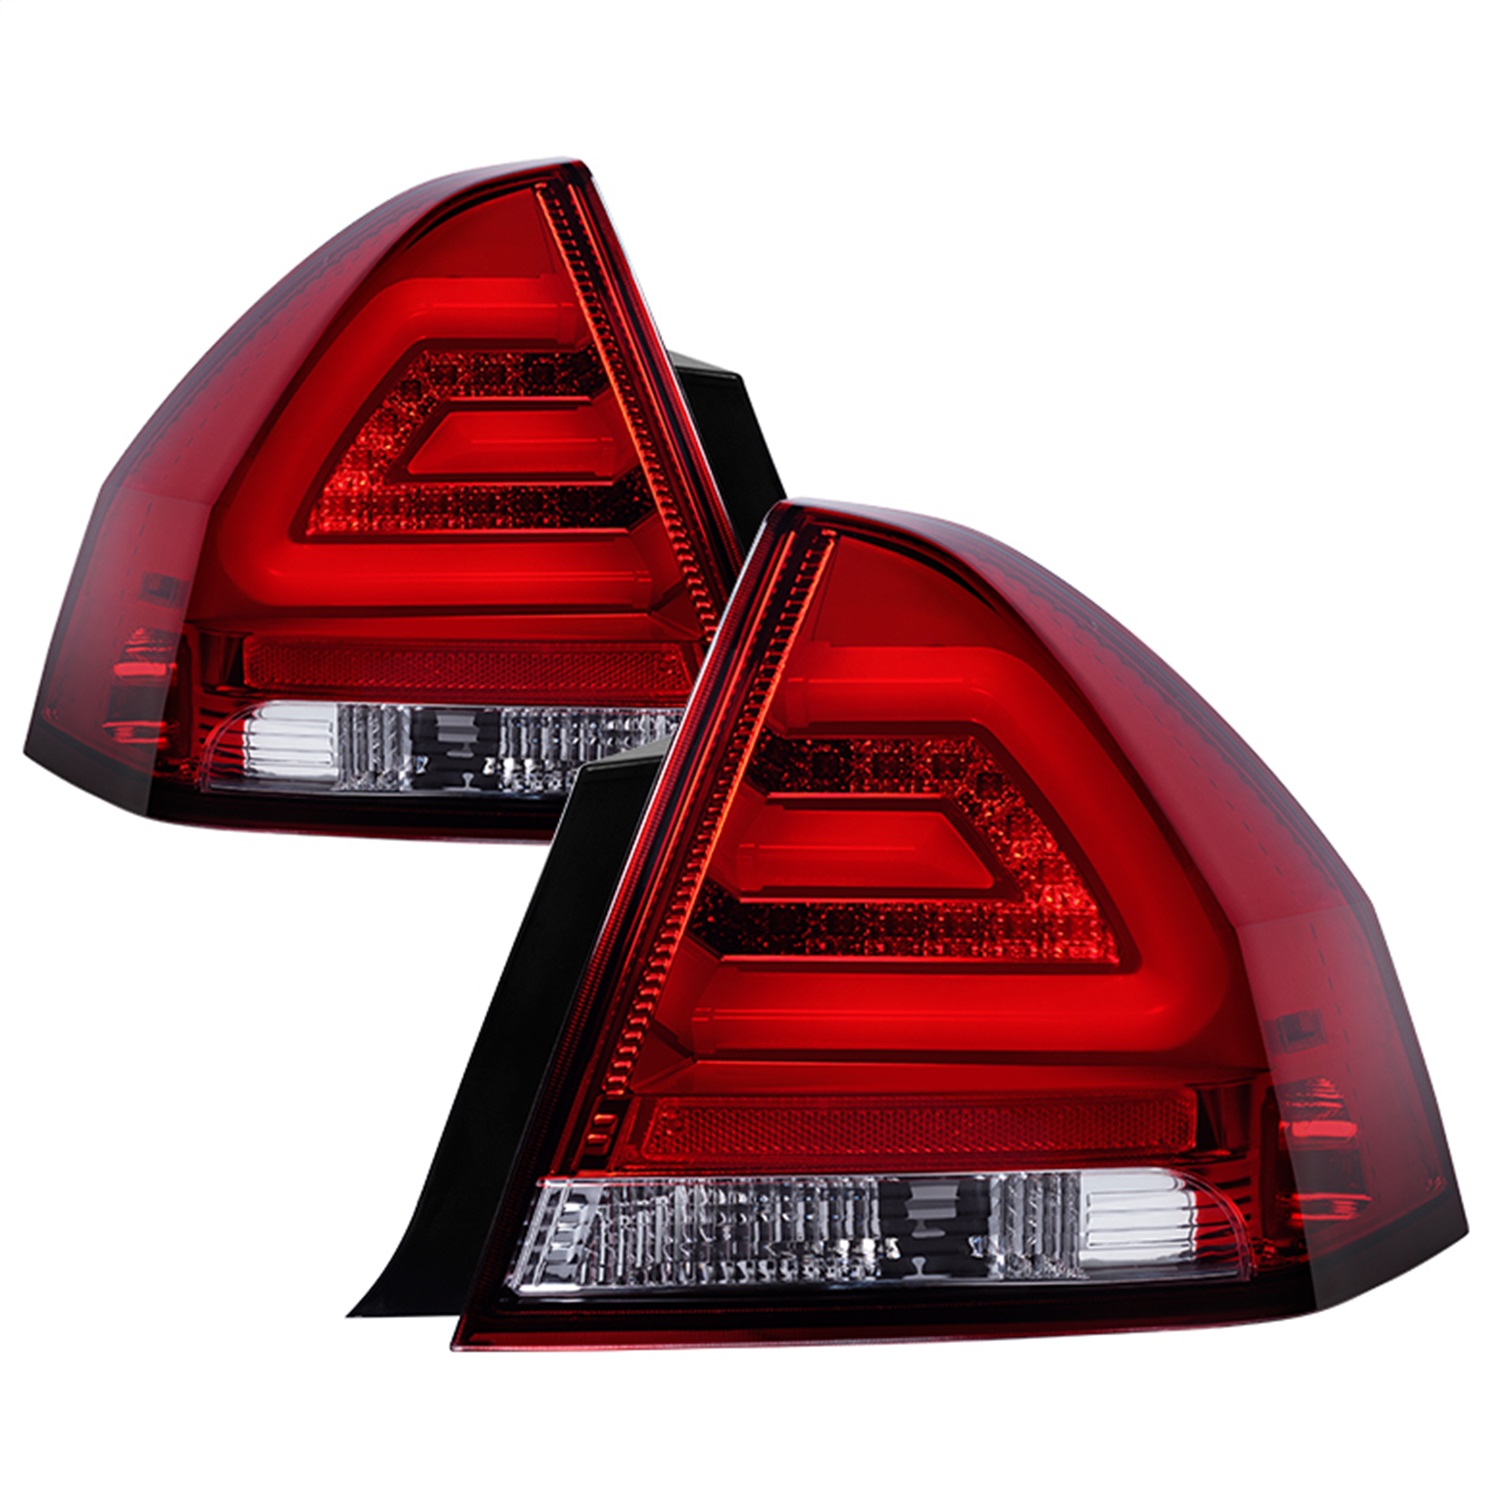 Spyder Auto 5076403 LED Tail Lights Fits 06-16 Impala Impala Limited